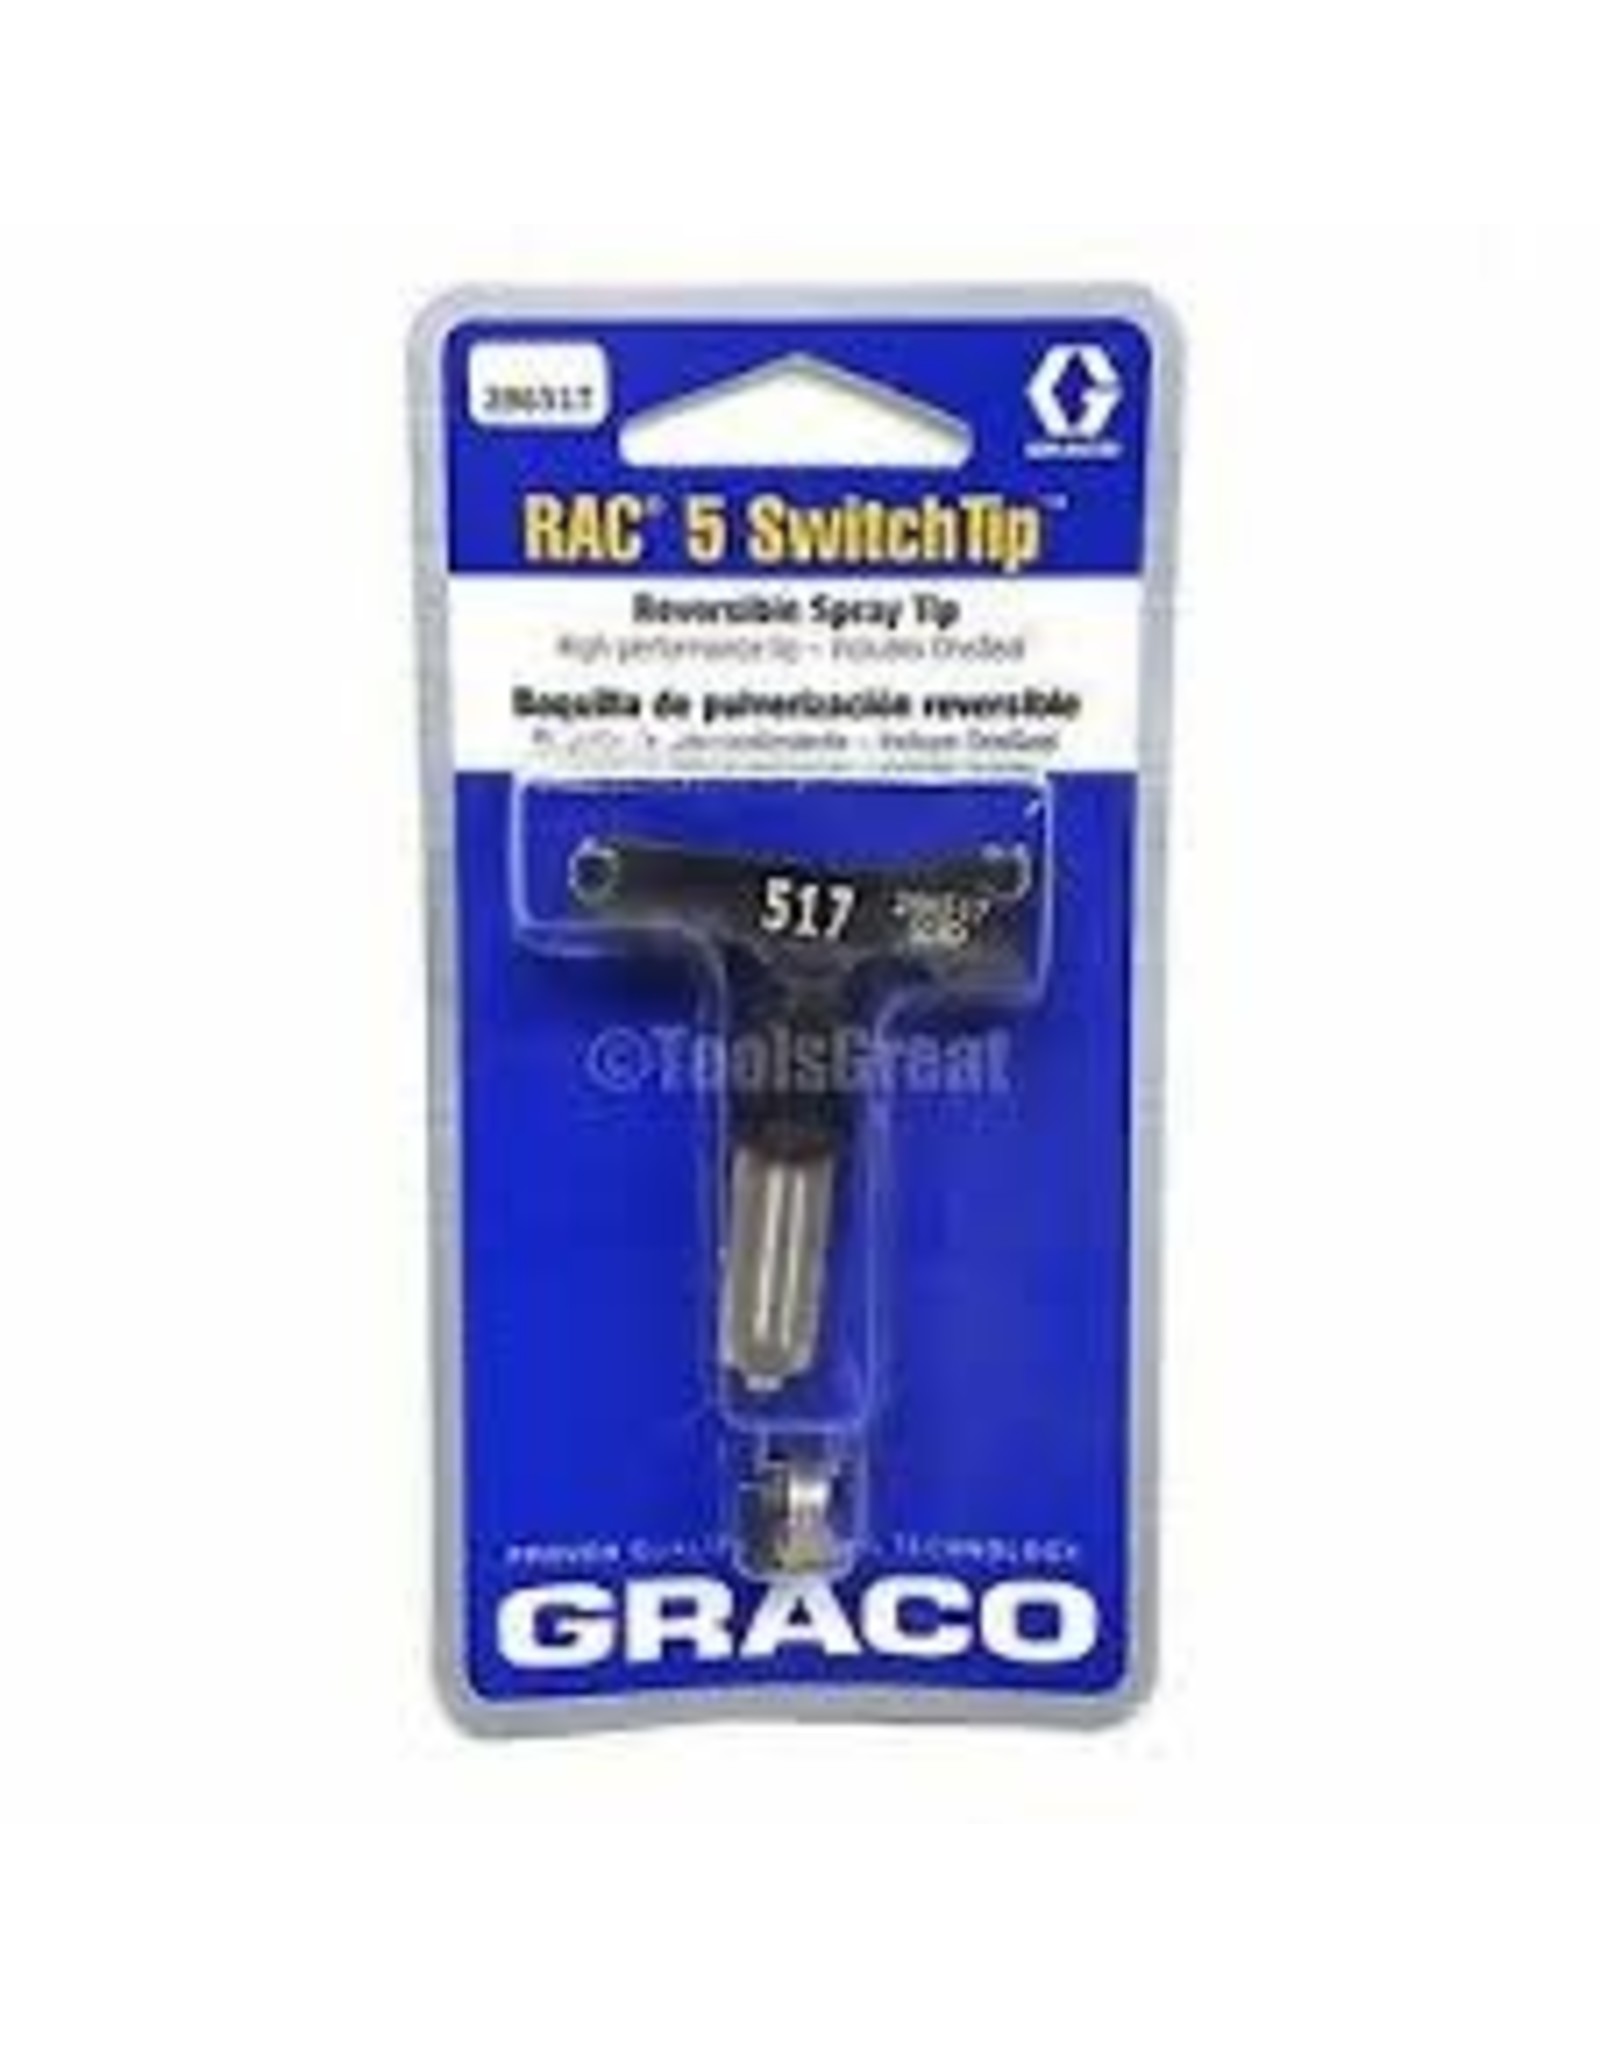 Graco 286517 Graco Rac 5 Switch Tip 517